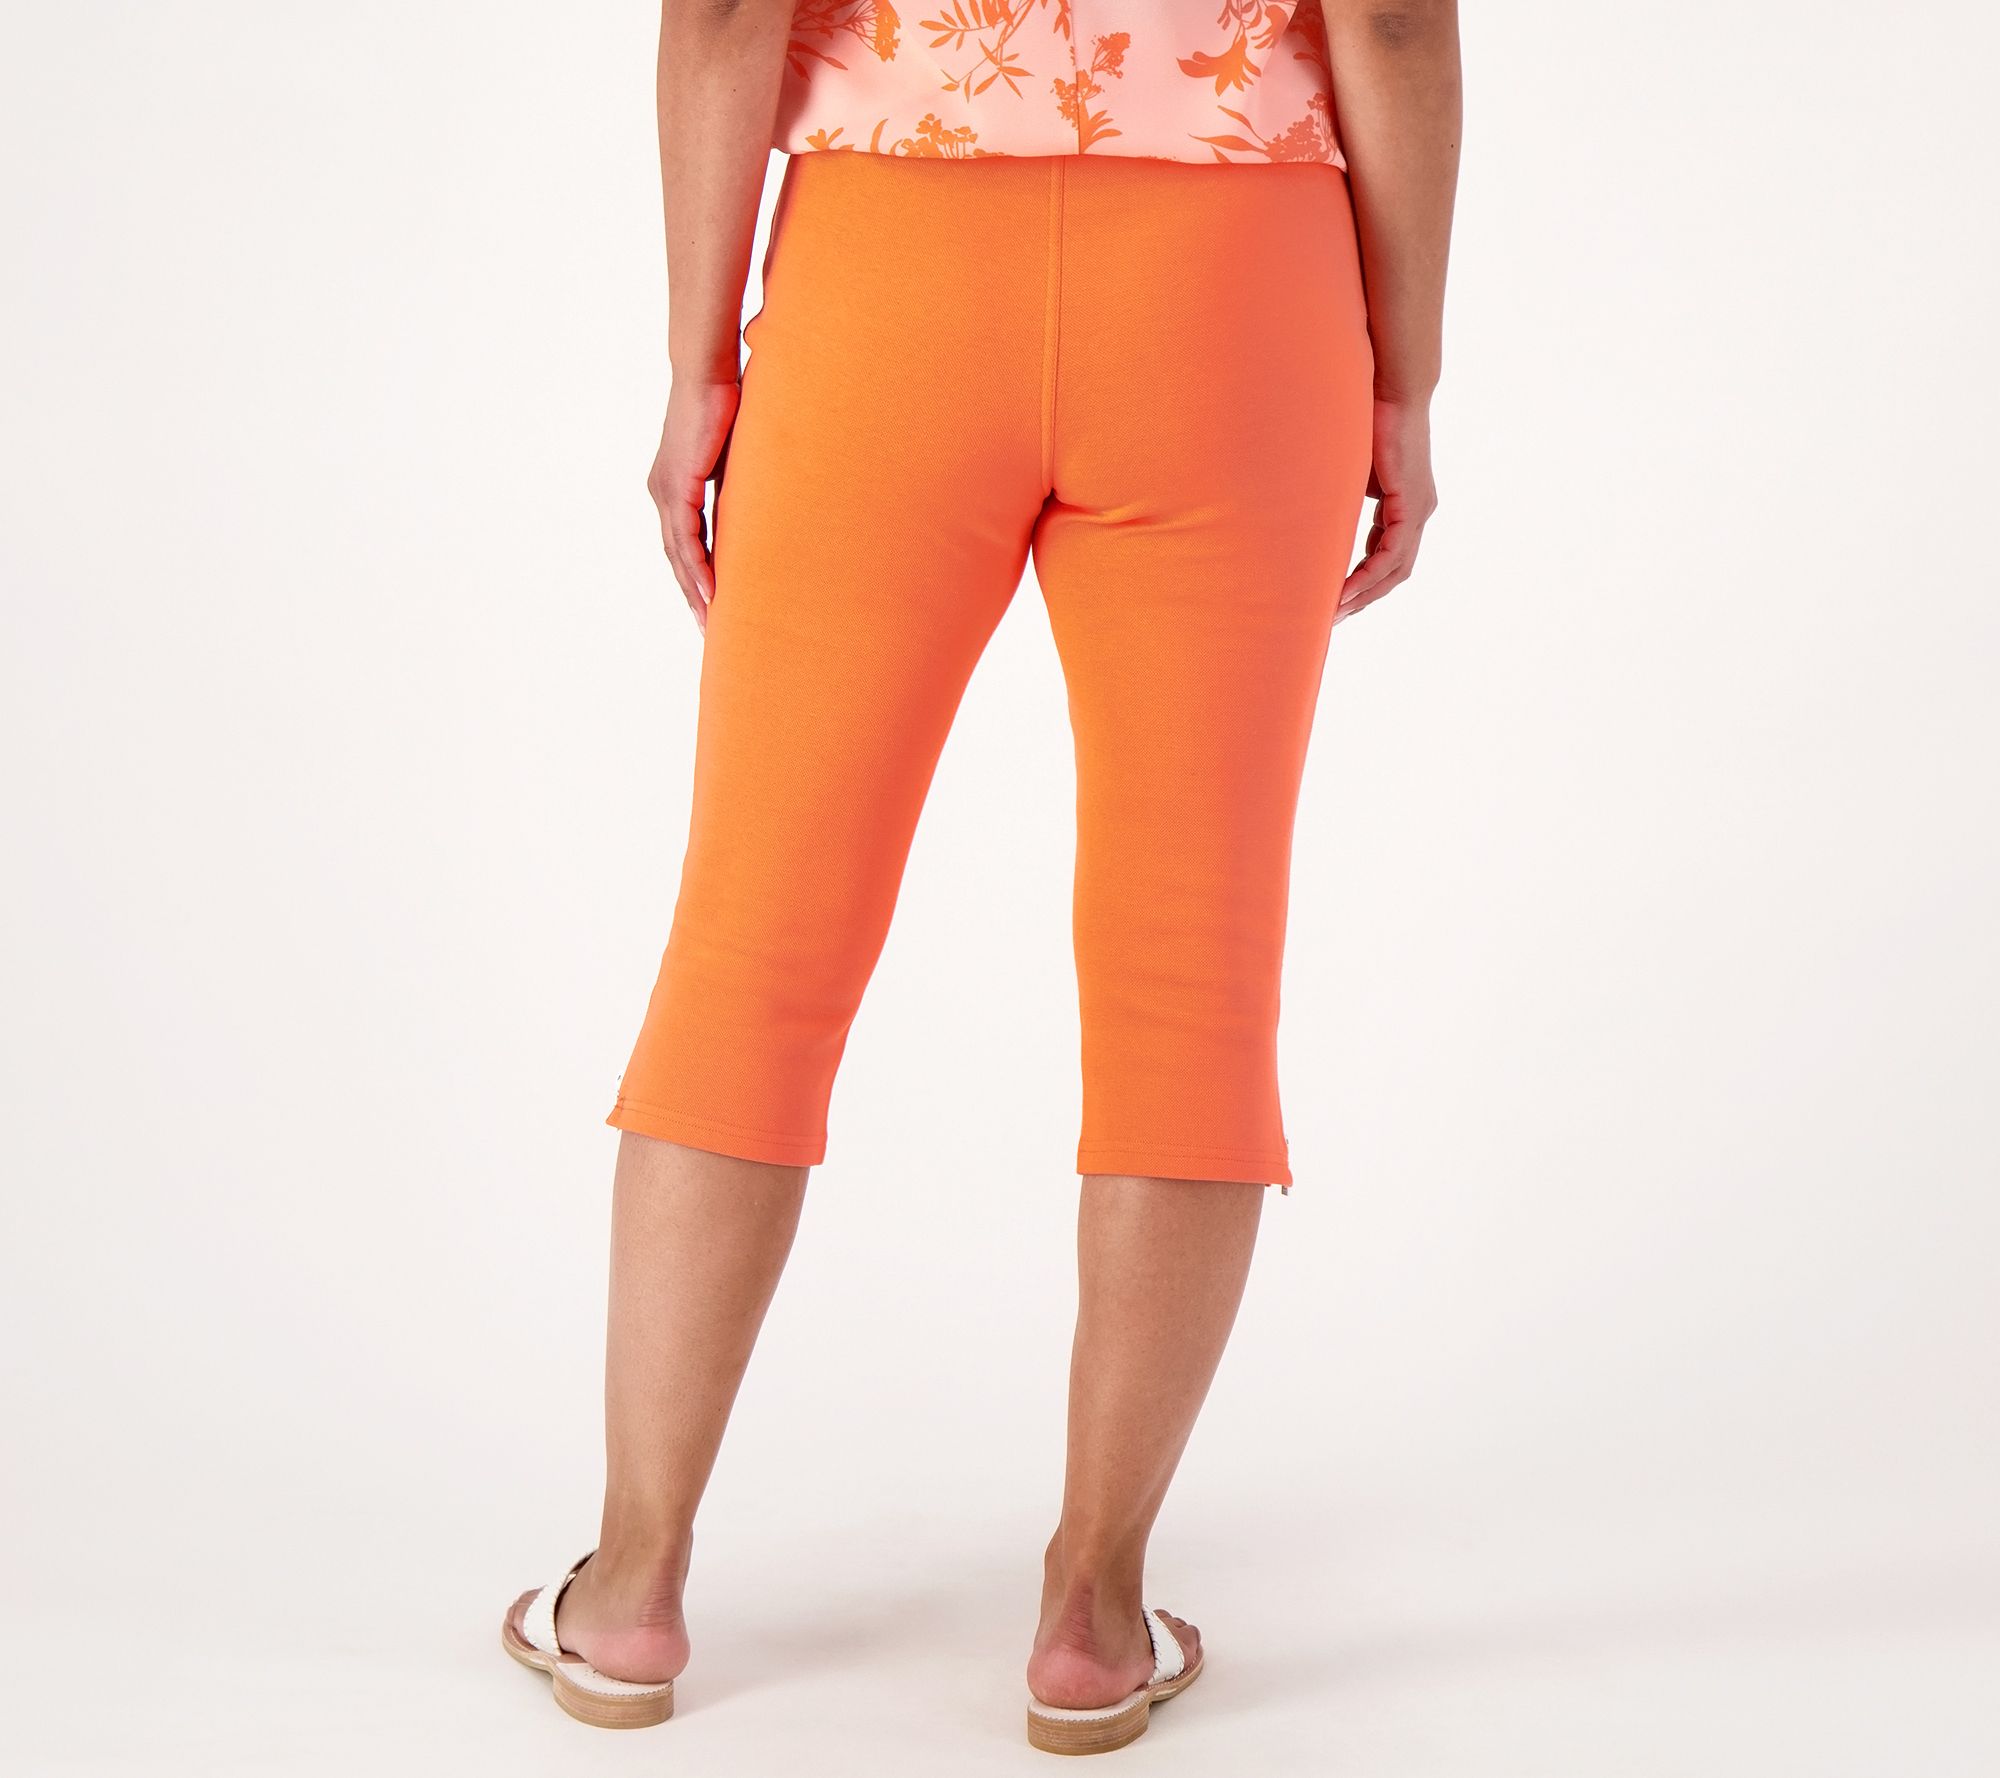 Women's Orange Capris & Cropped Pants